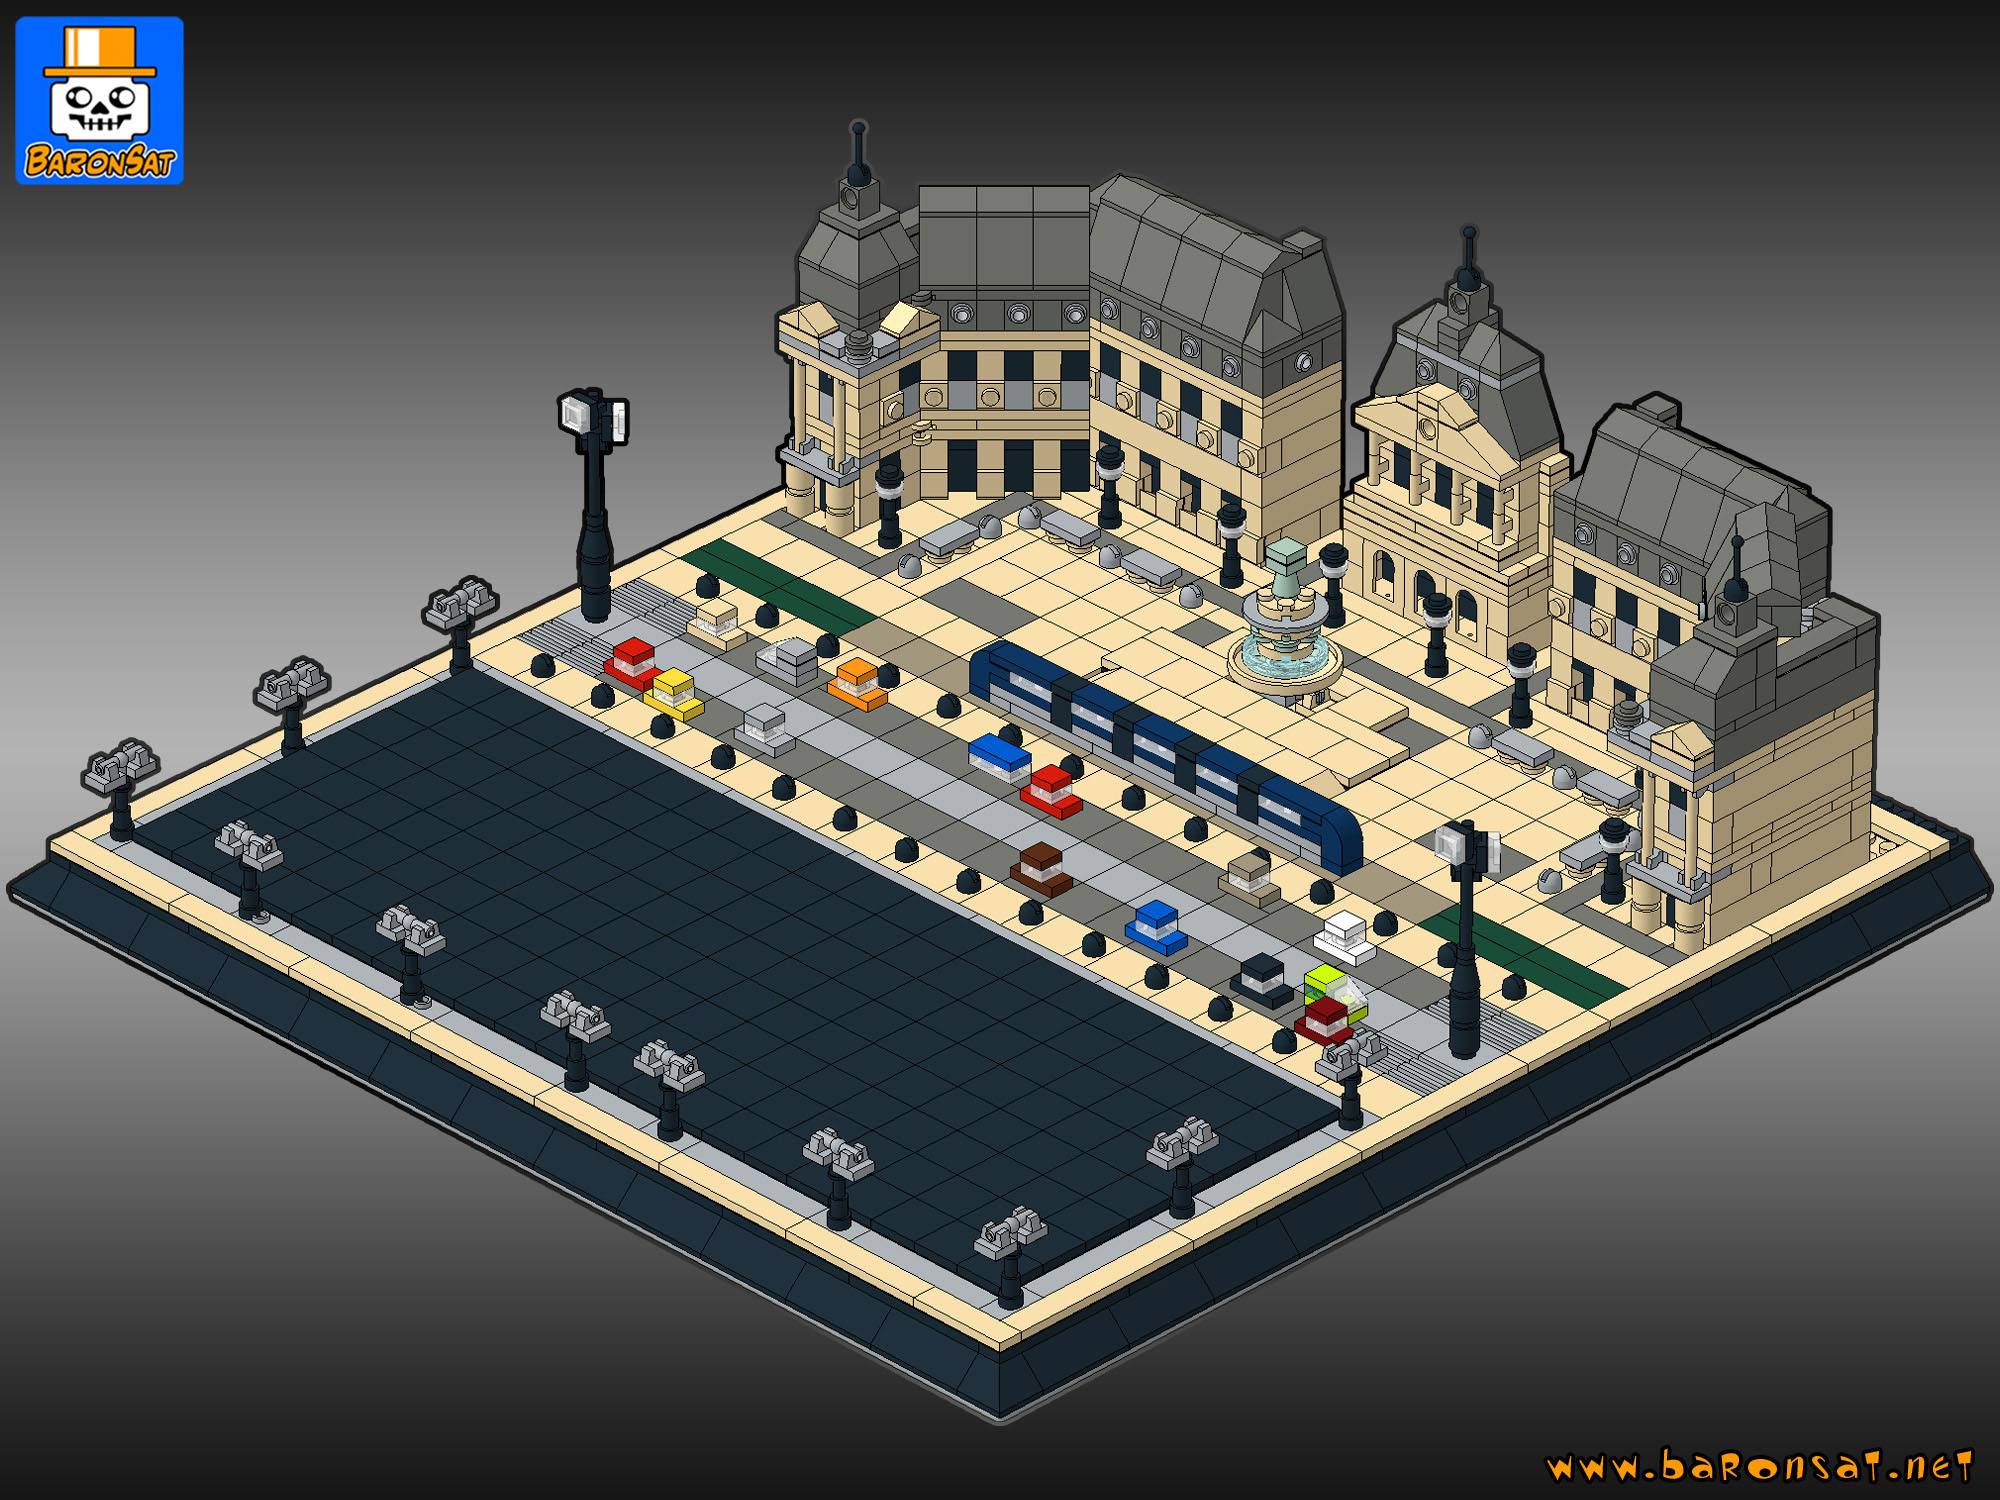 architecture custom moc models made of lego bricks